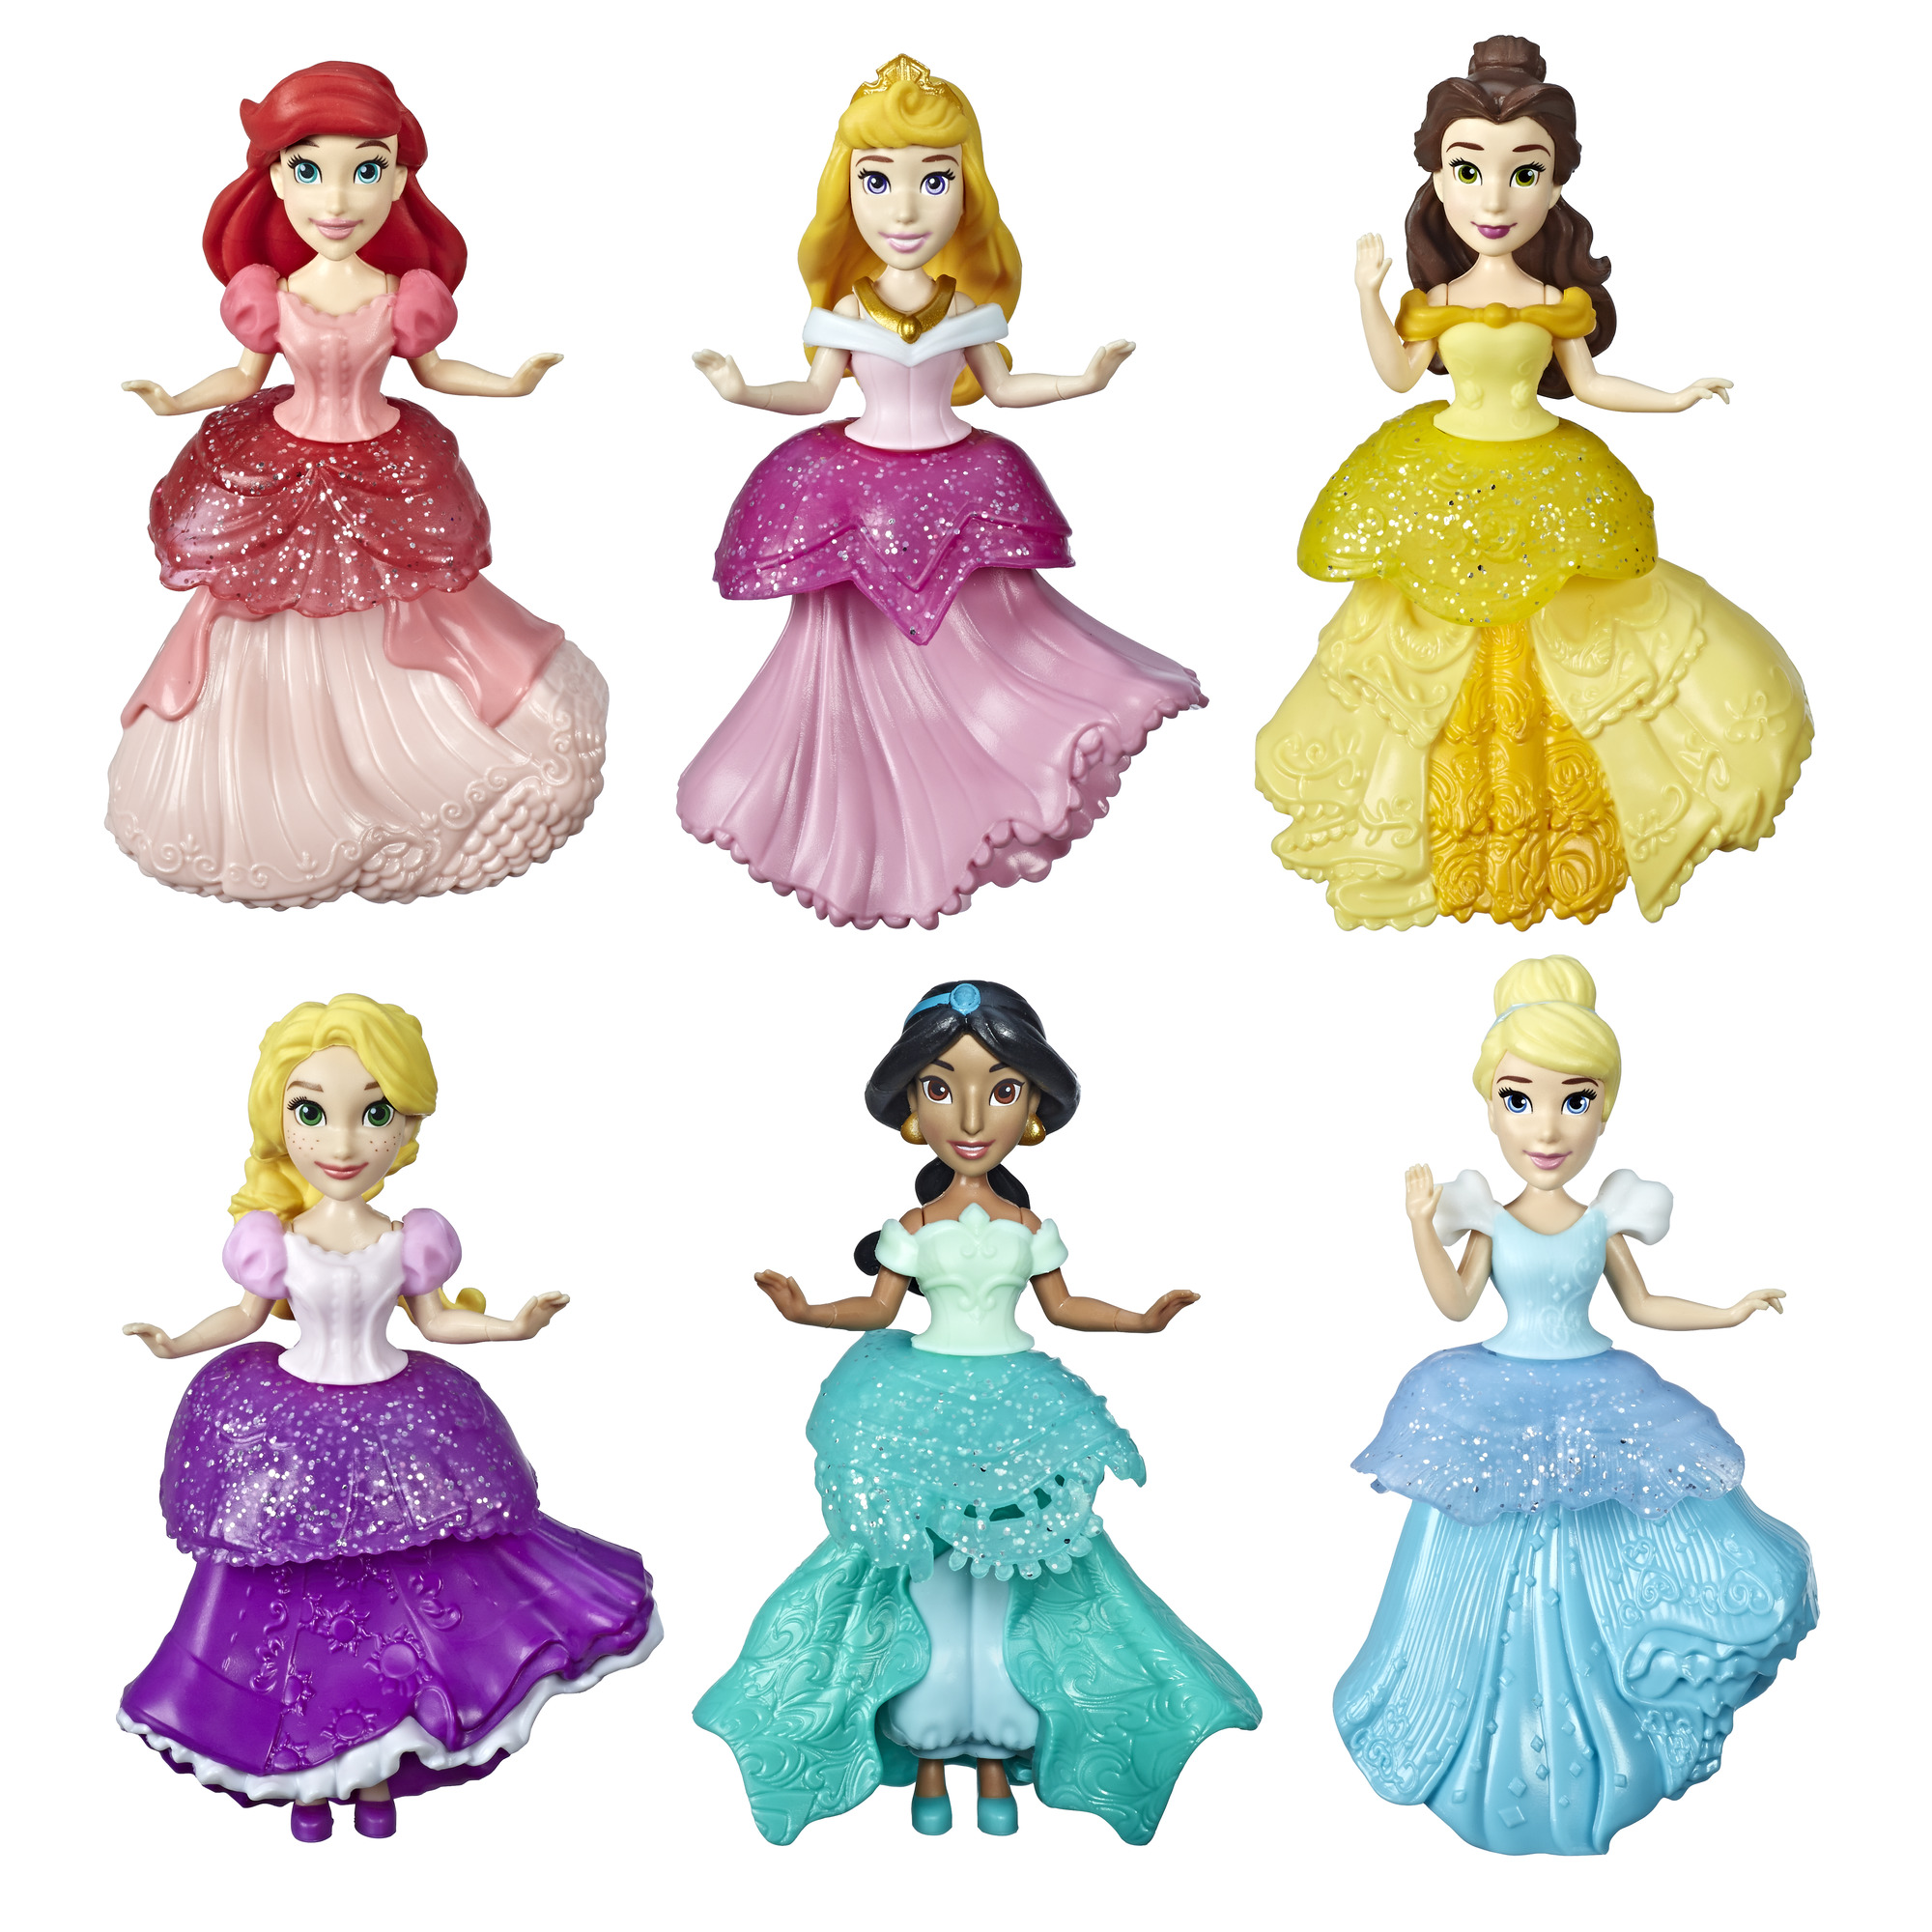 Hasbro Disney Princess Comics Royal Rivals Set 6 E9582 Figures for sale online